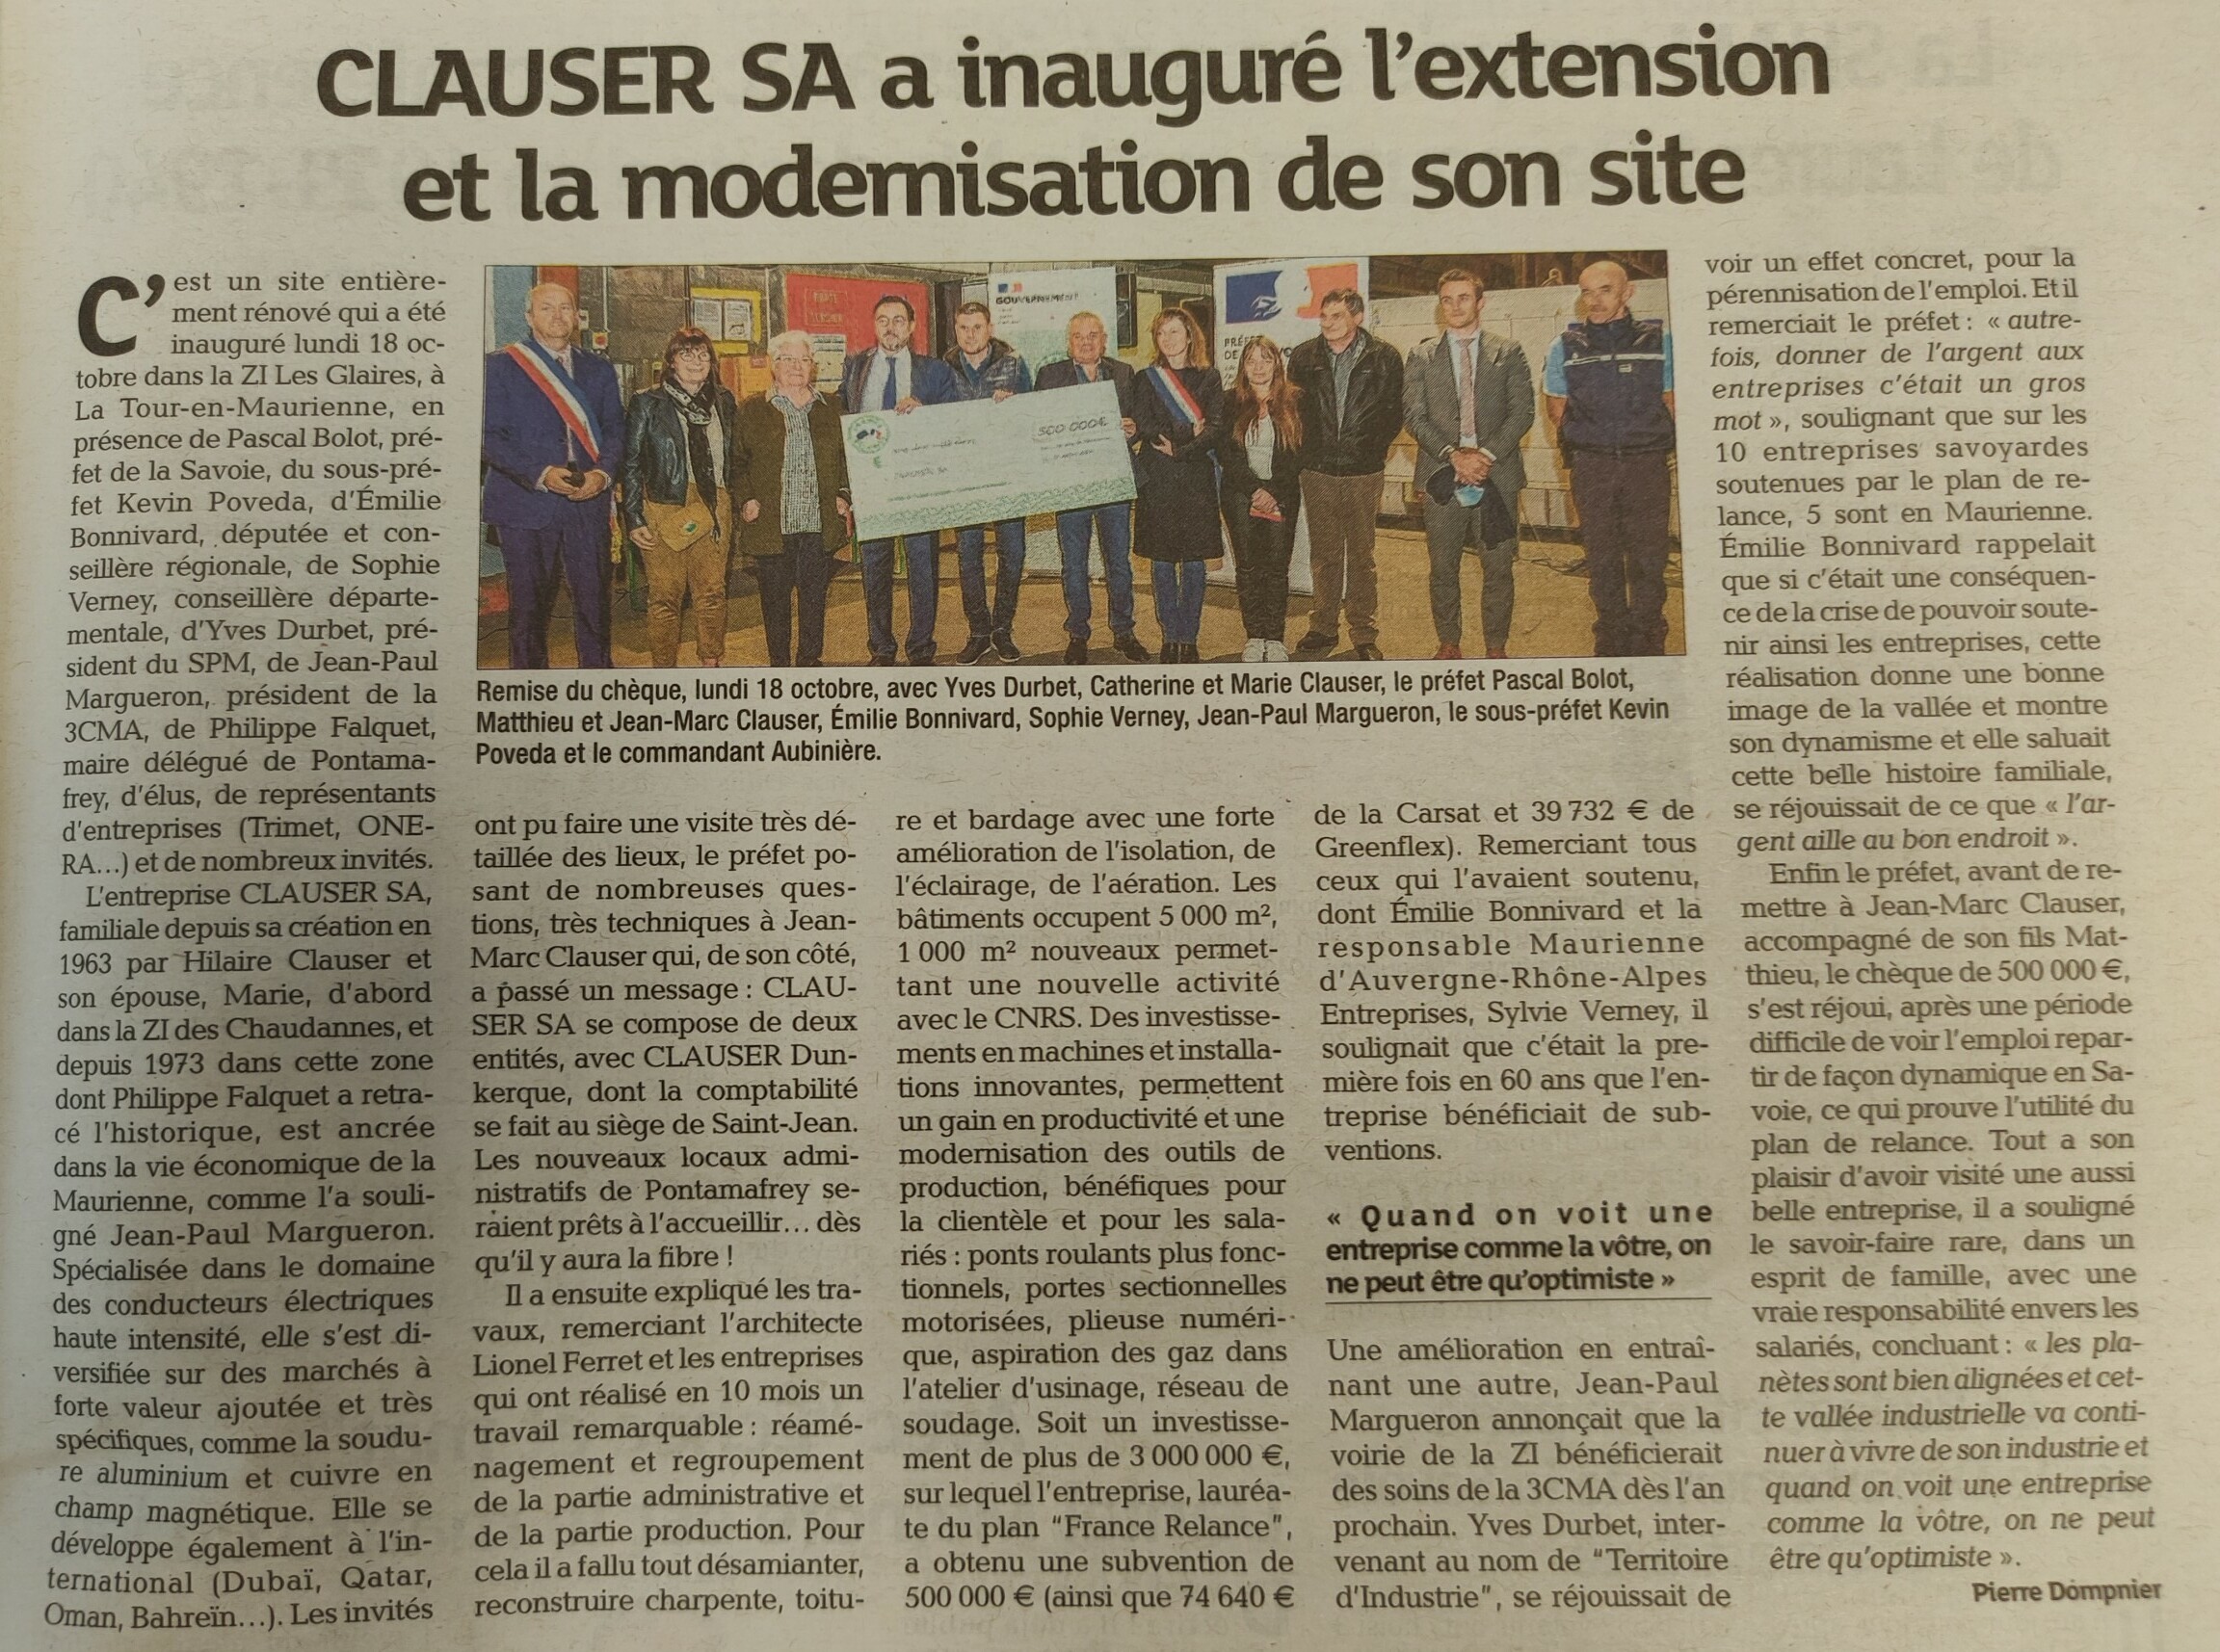 Inauguration Clauser - La Maurienne